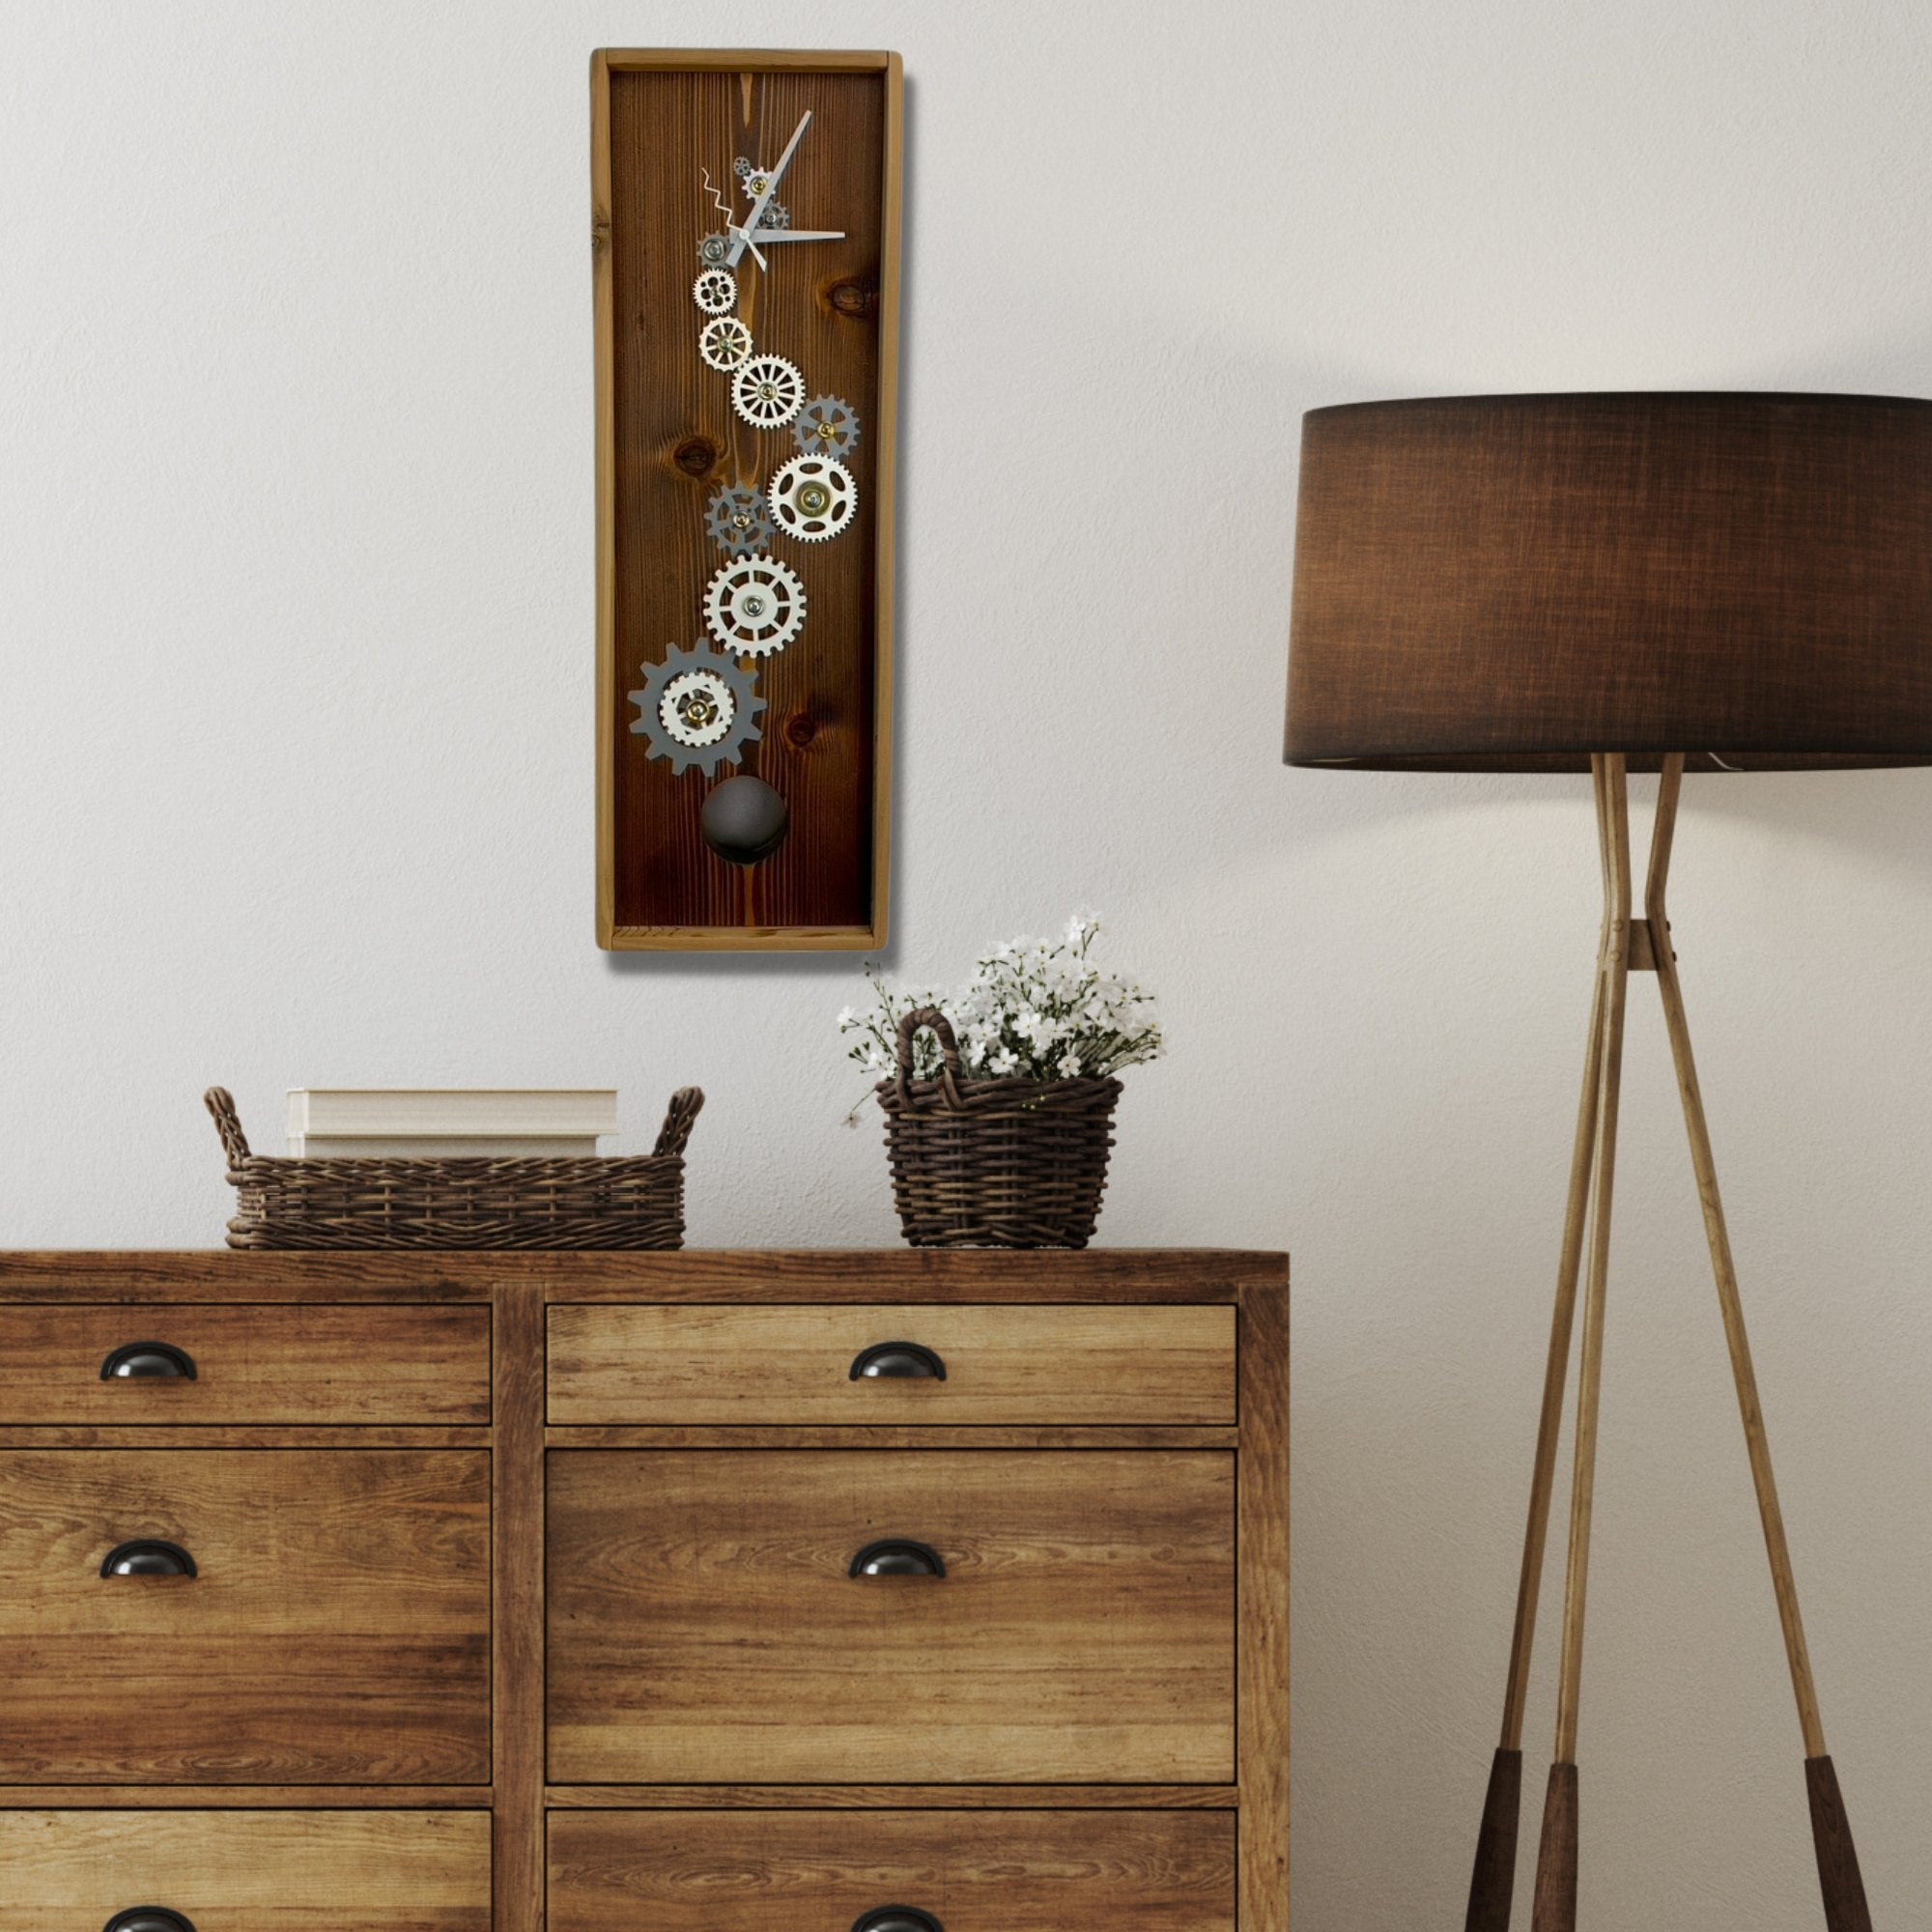 KingWood Pendulum Wall Clock w/ Gears, Cedar & Silver on bedroom wall